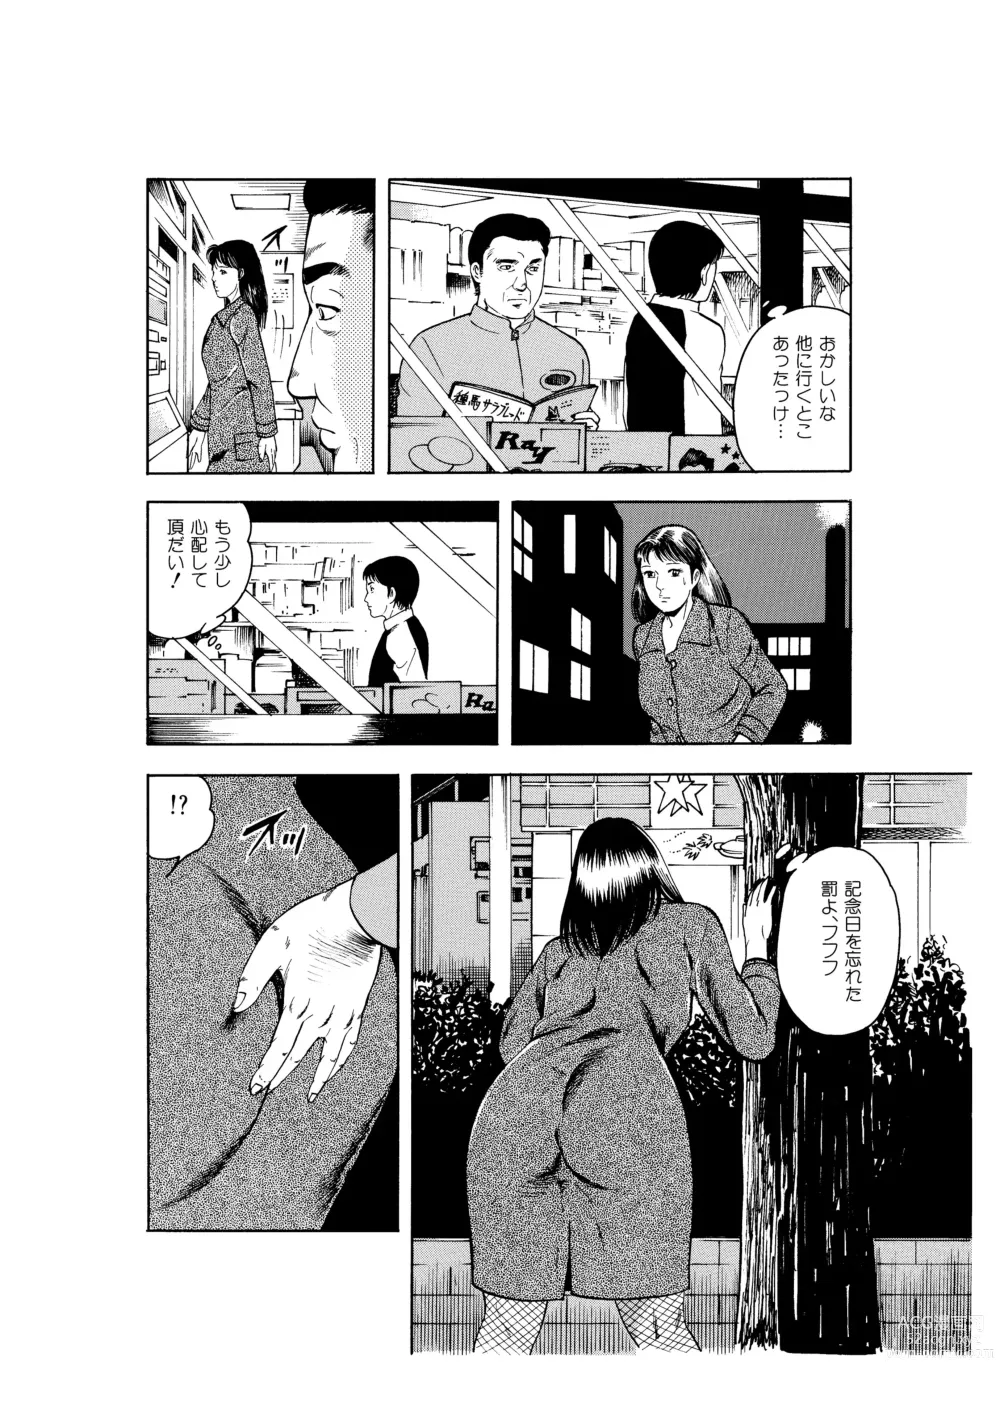 Page 125 of doujinshi Kanjuku Hitozuma Collection 1